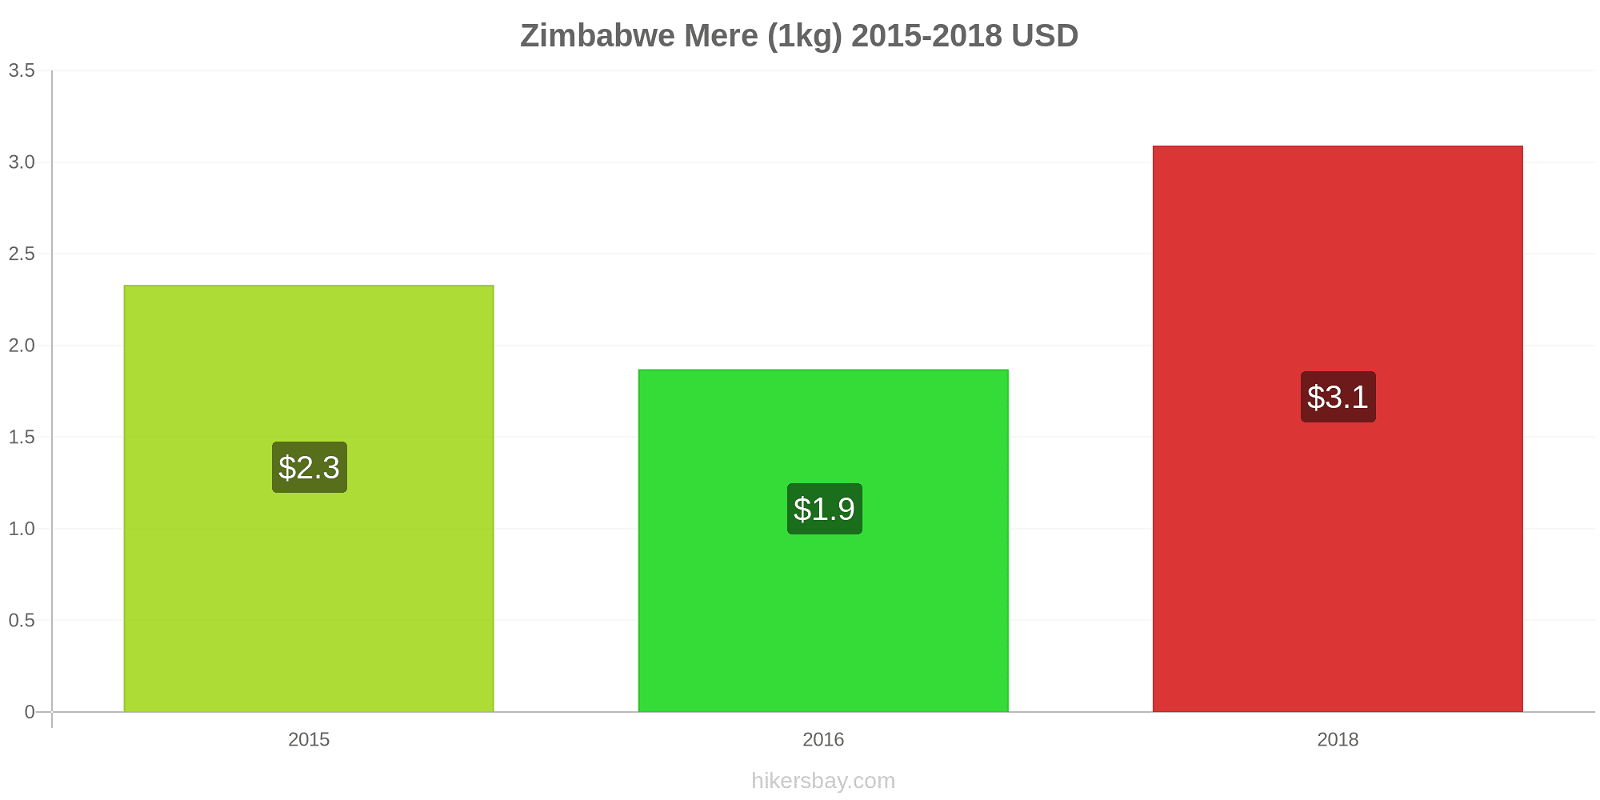 Zimbabwe modificări de preț Mere (1kg) hikersbay.com